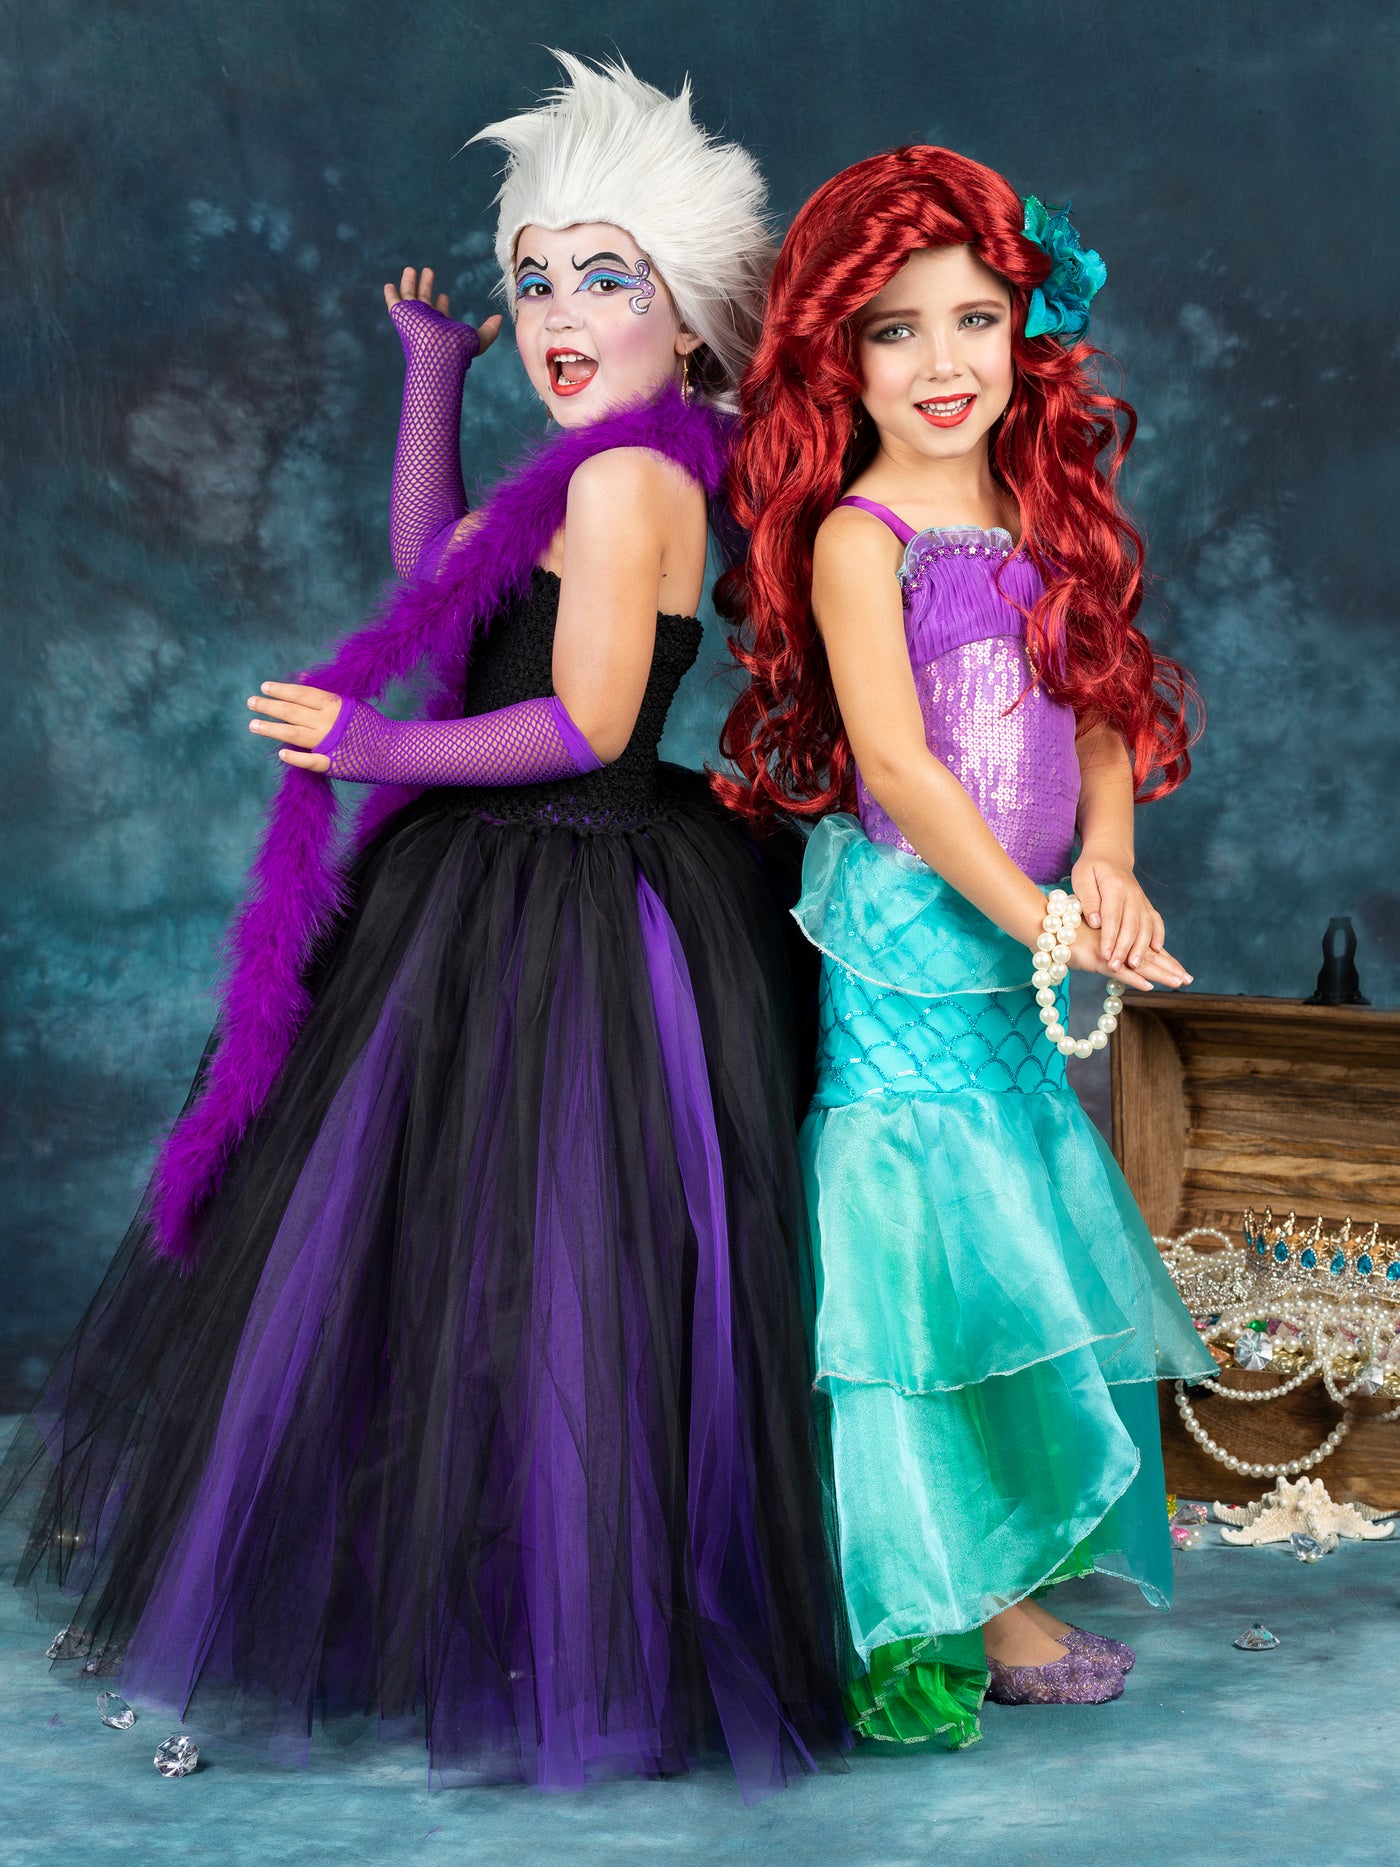 the little mermaid ursula costume